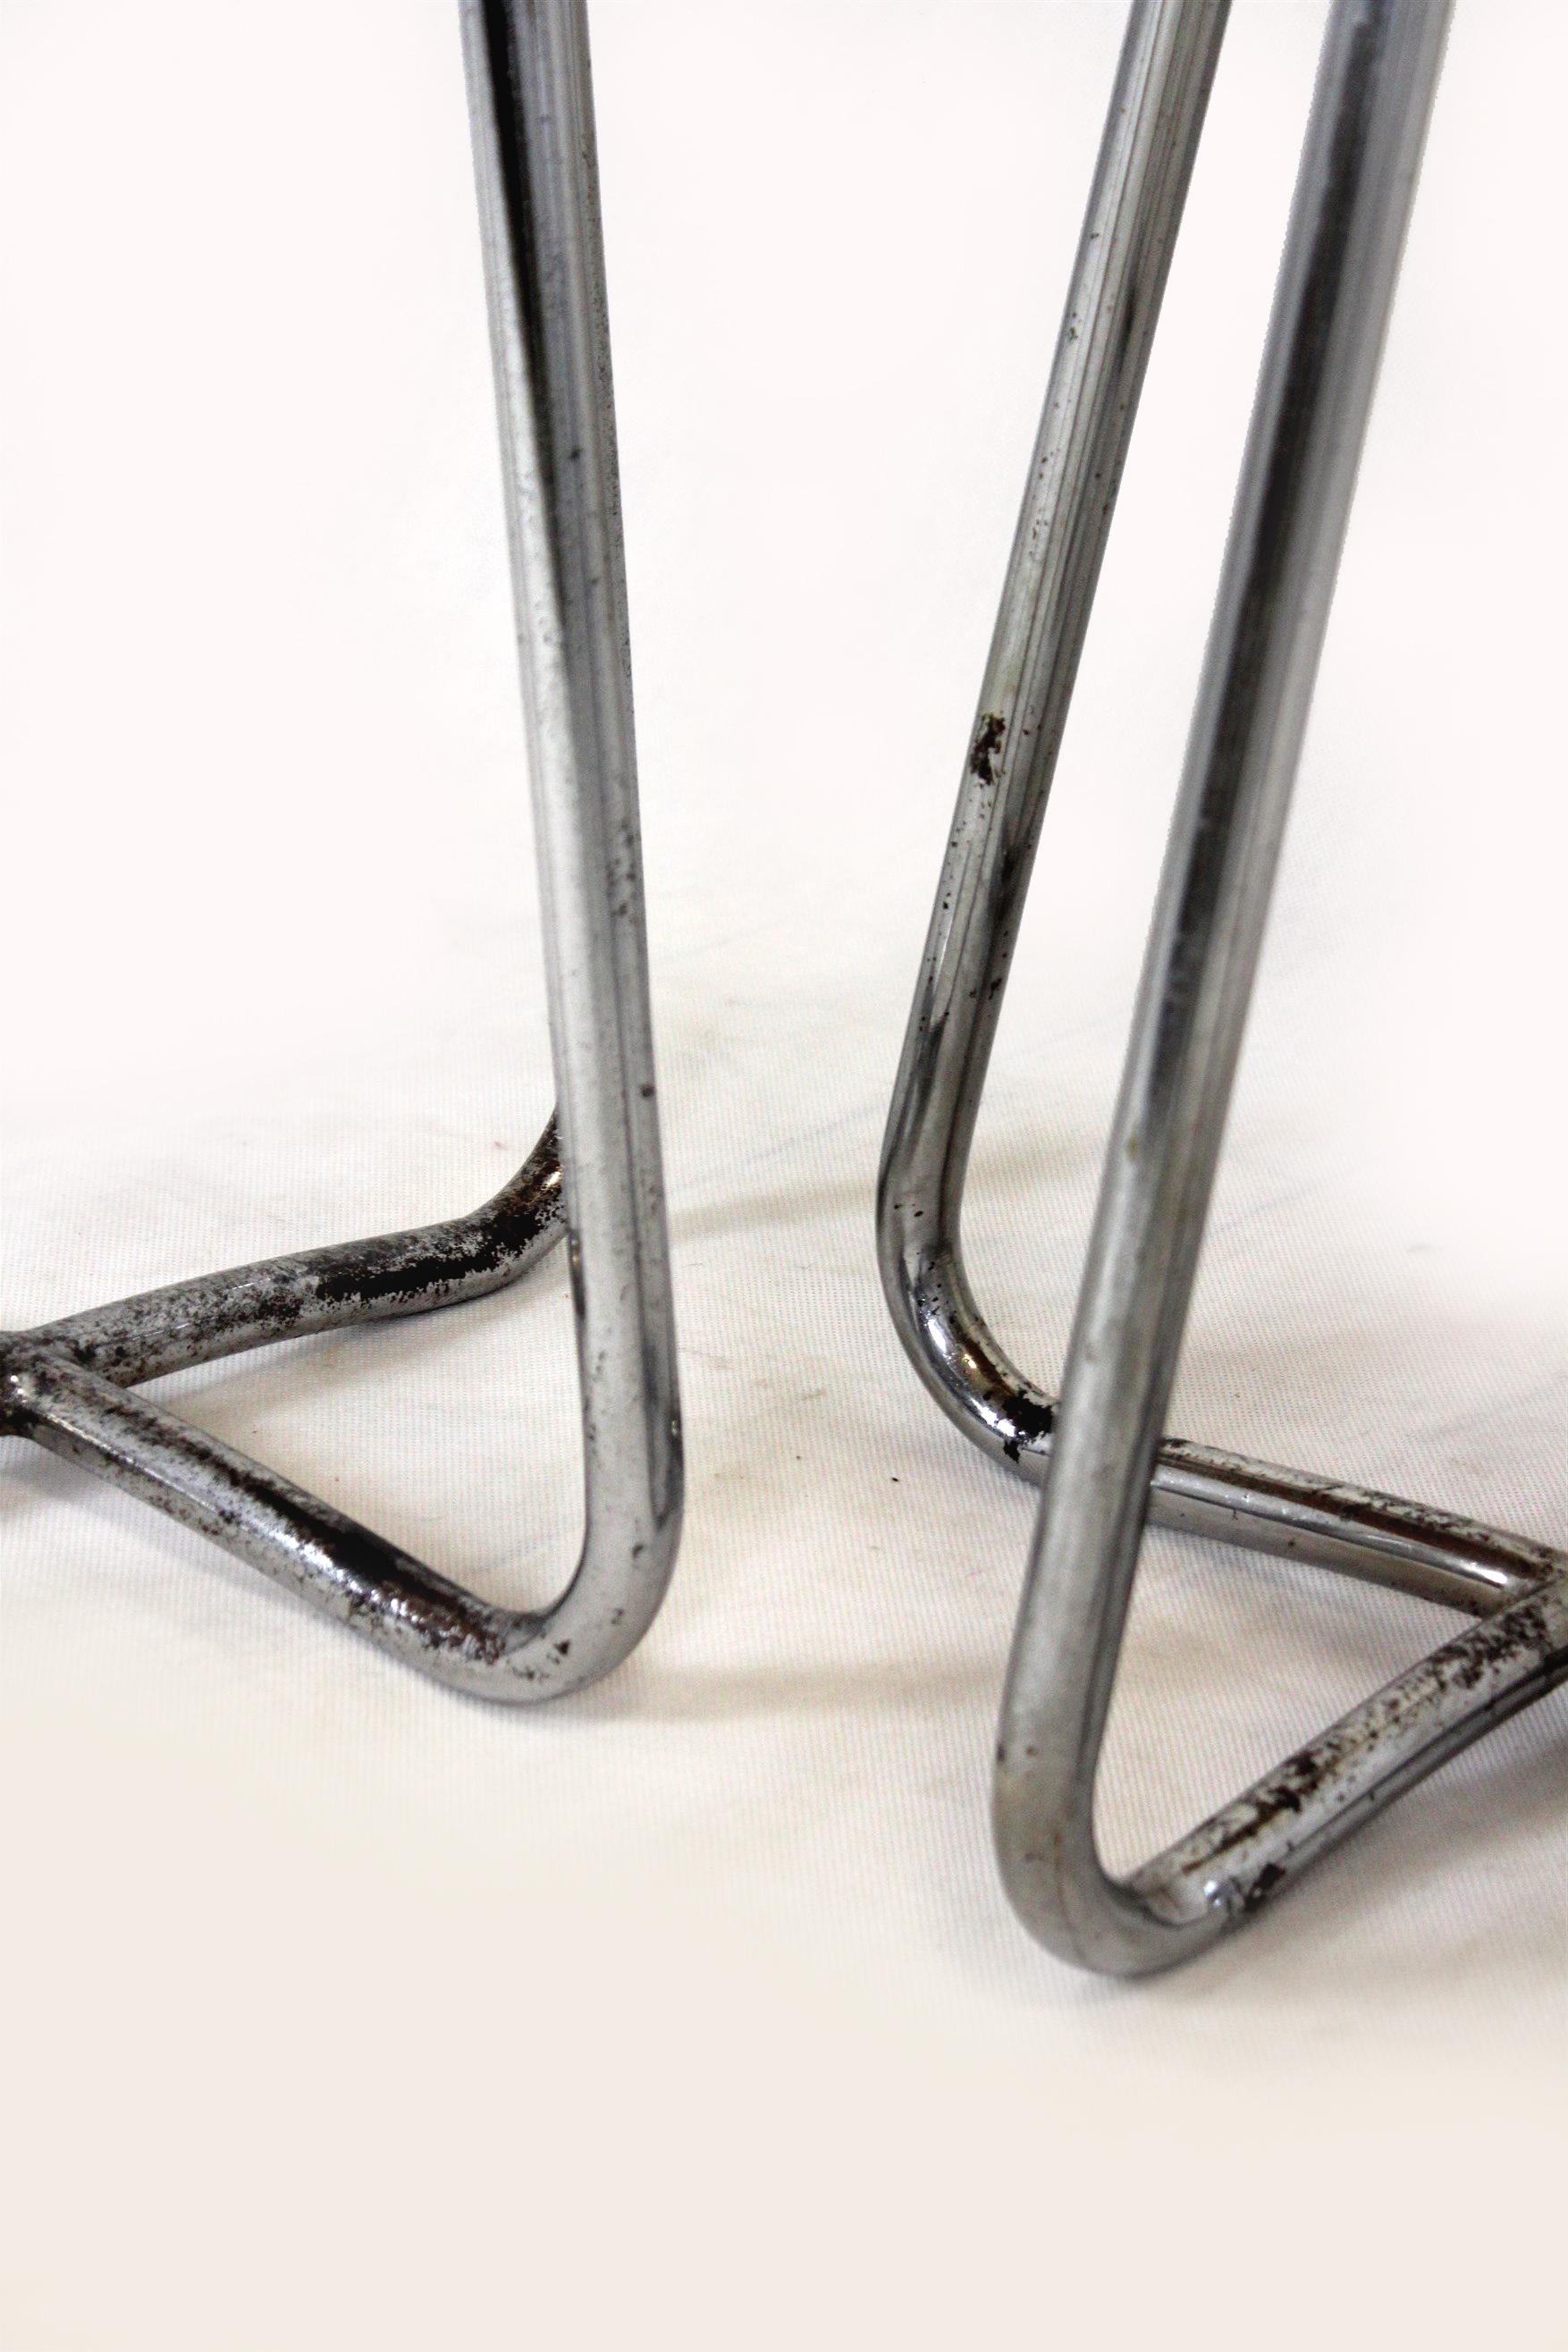 Mid-20th Century Bauhaus Chrome Tubular Steel Stools by Robert Slezak, 1930s, Set of 3 For Sale